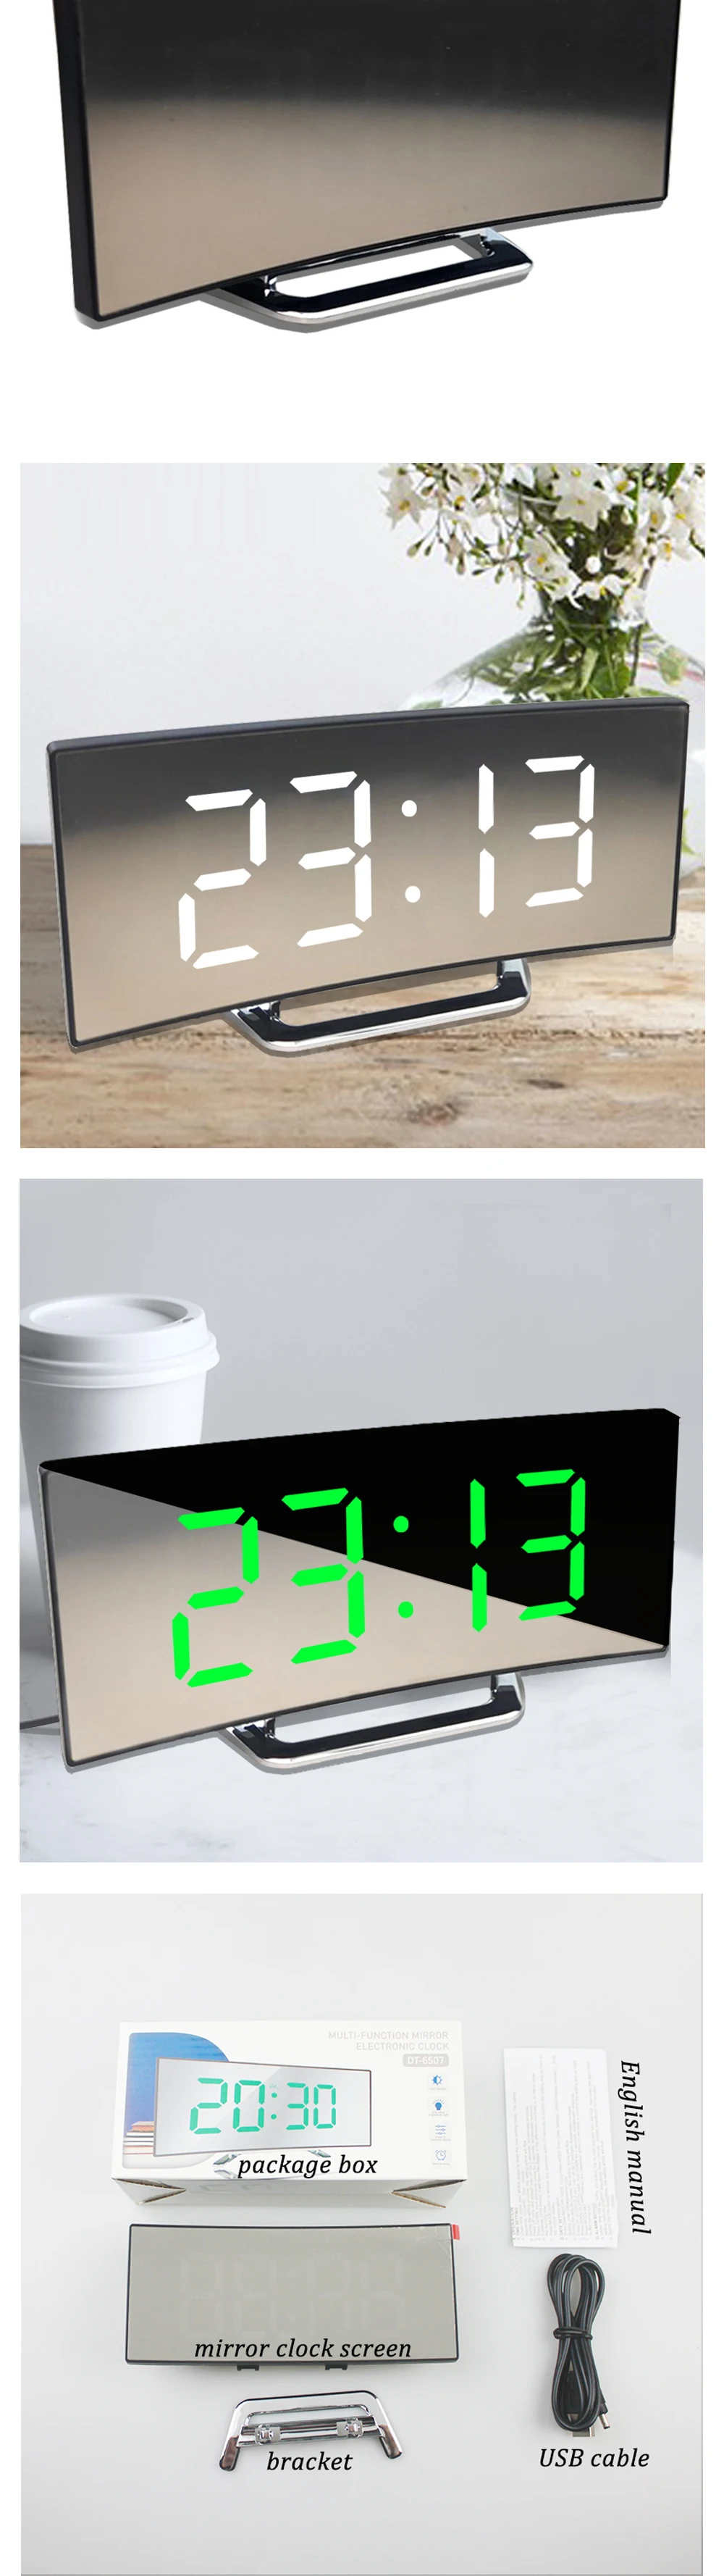 Digital Alarm Clock Alarm Clocks for Kids Bedroom Temperature Snooze Function Desk Table Clock LED Clock Electronic Clock Table